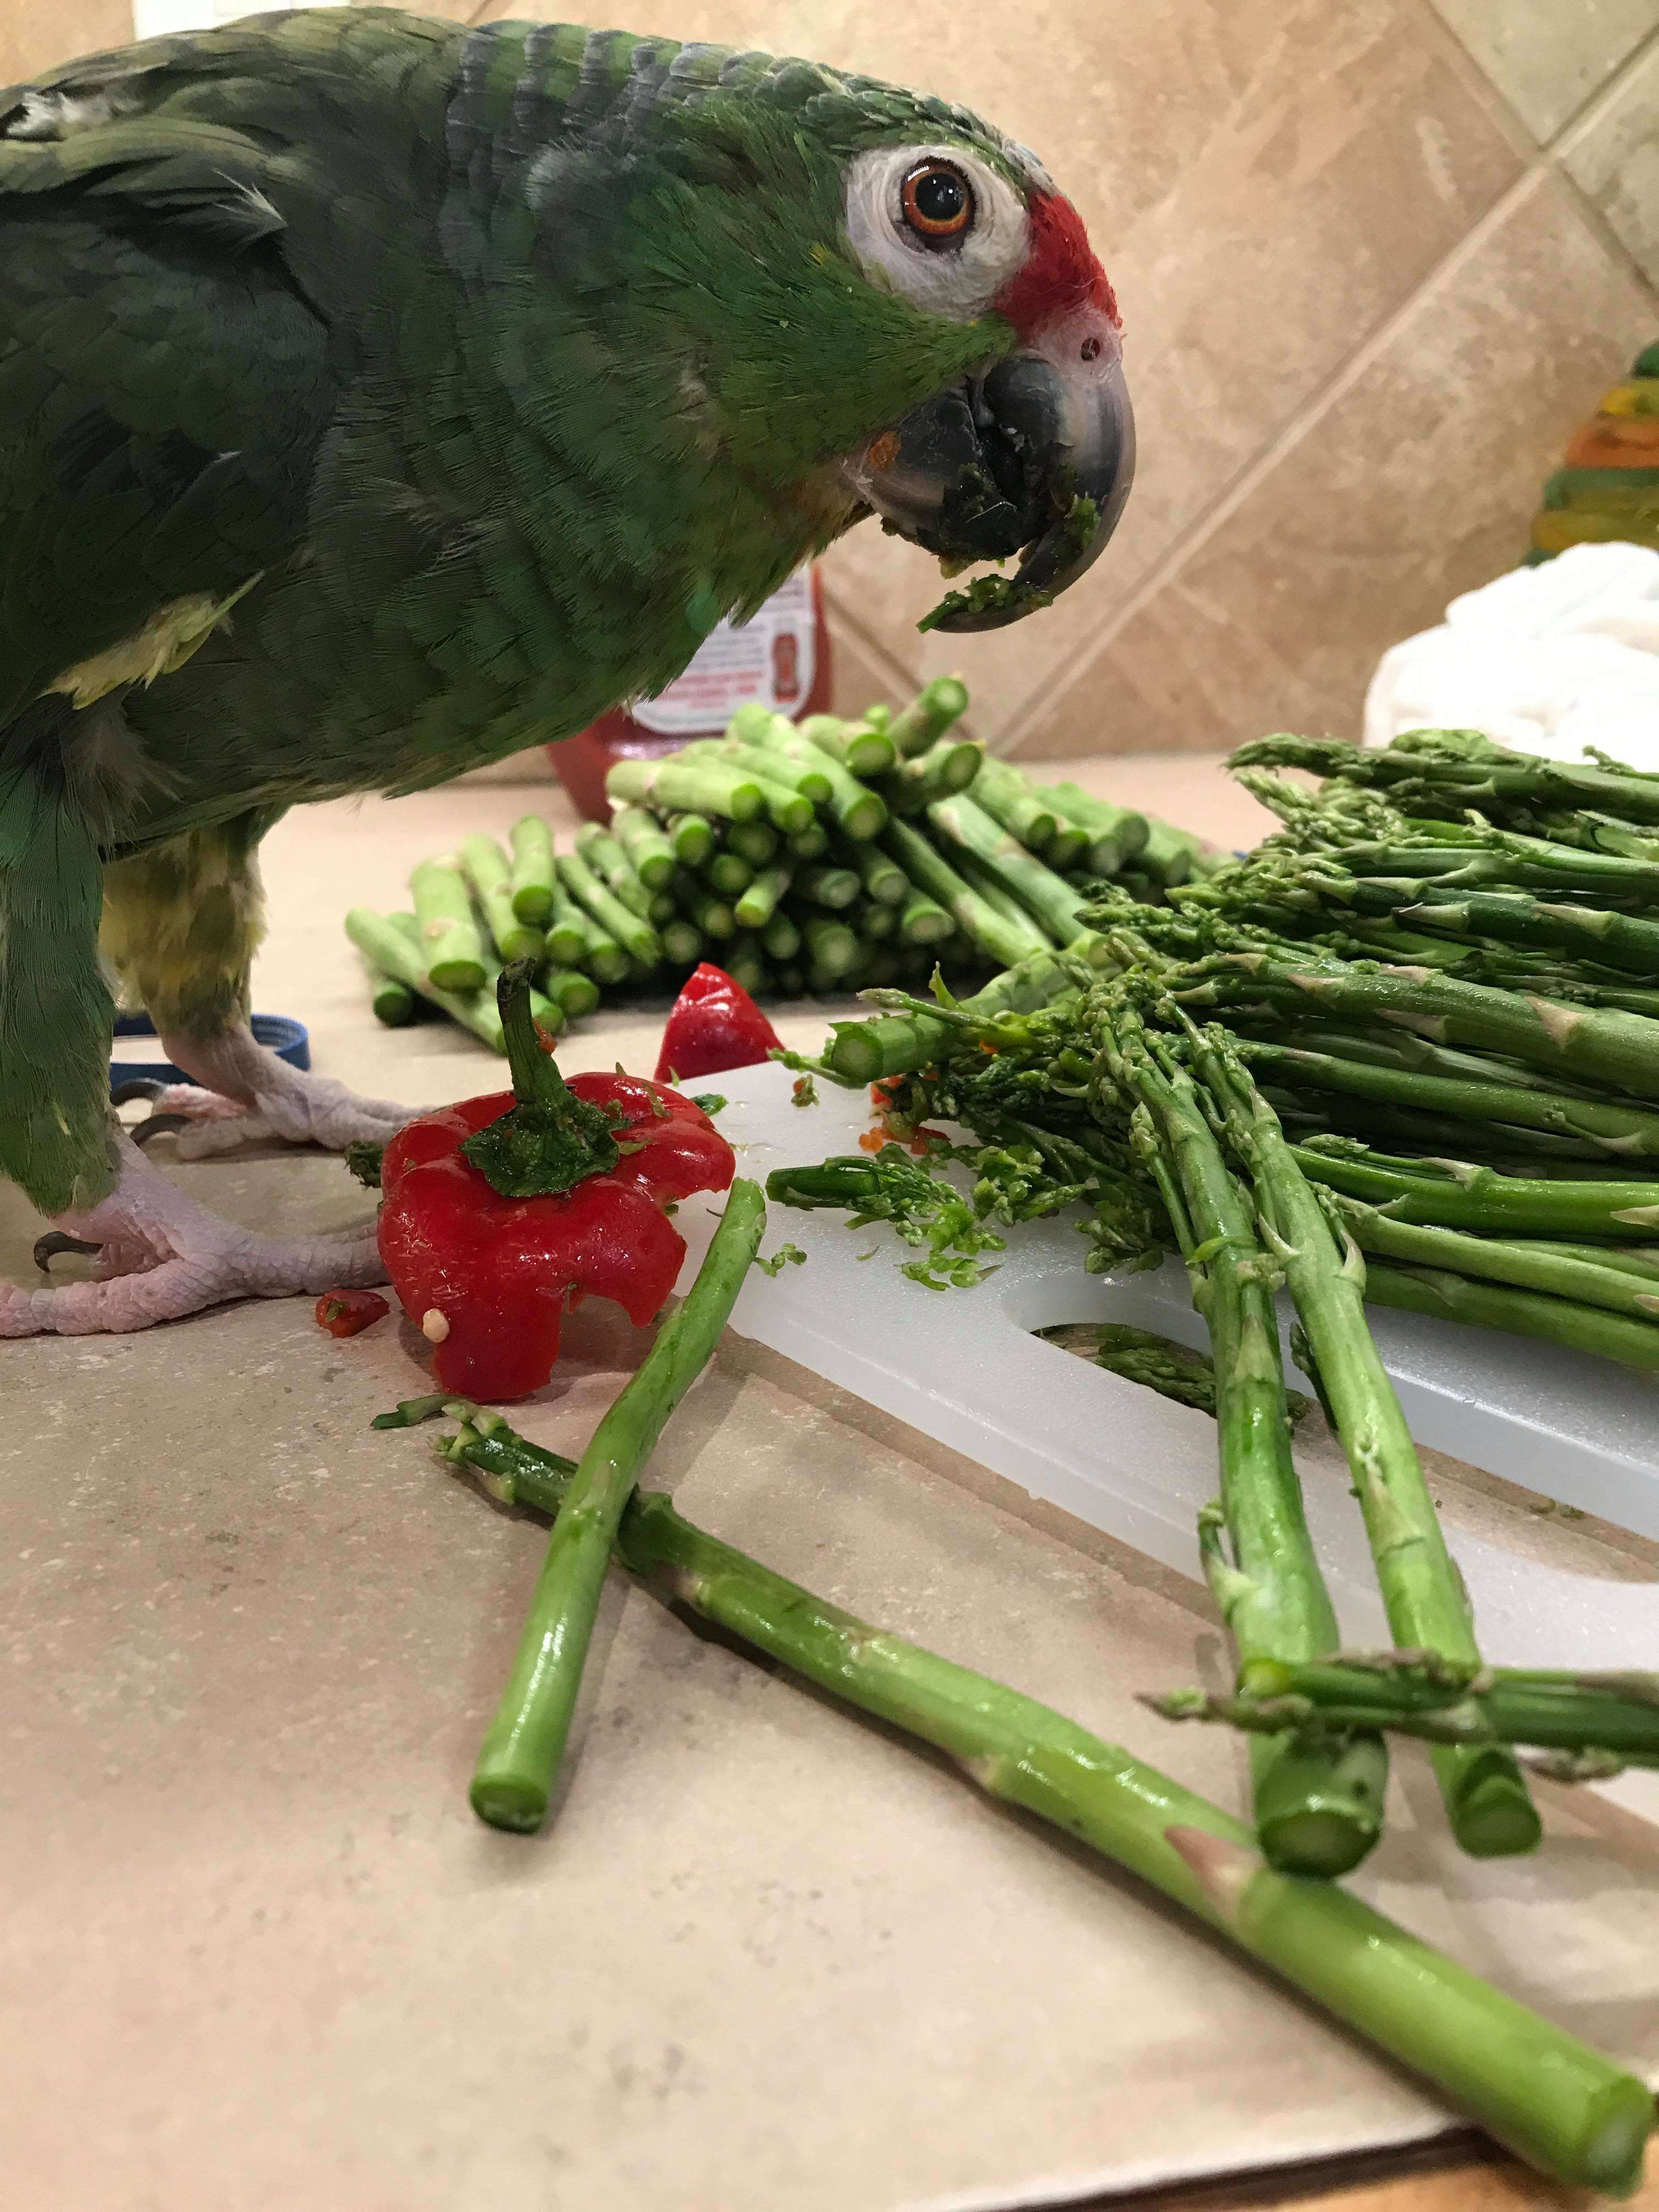 Senior rescue parrot with asparagus